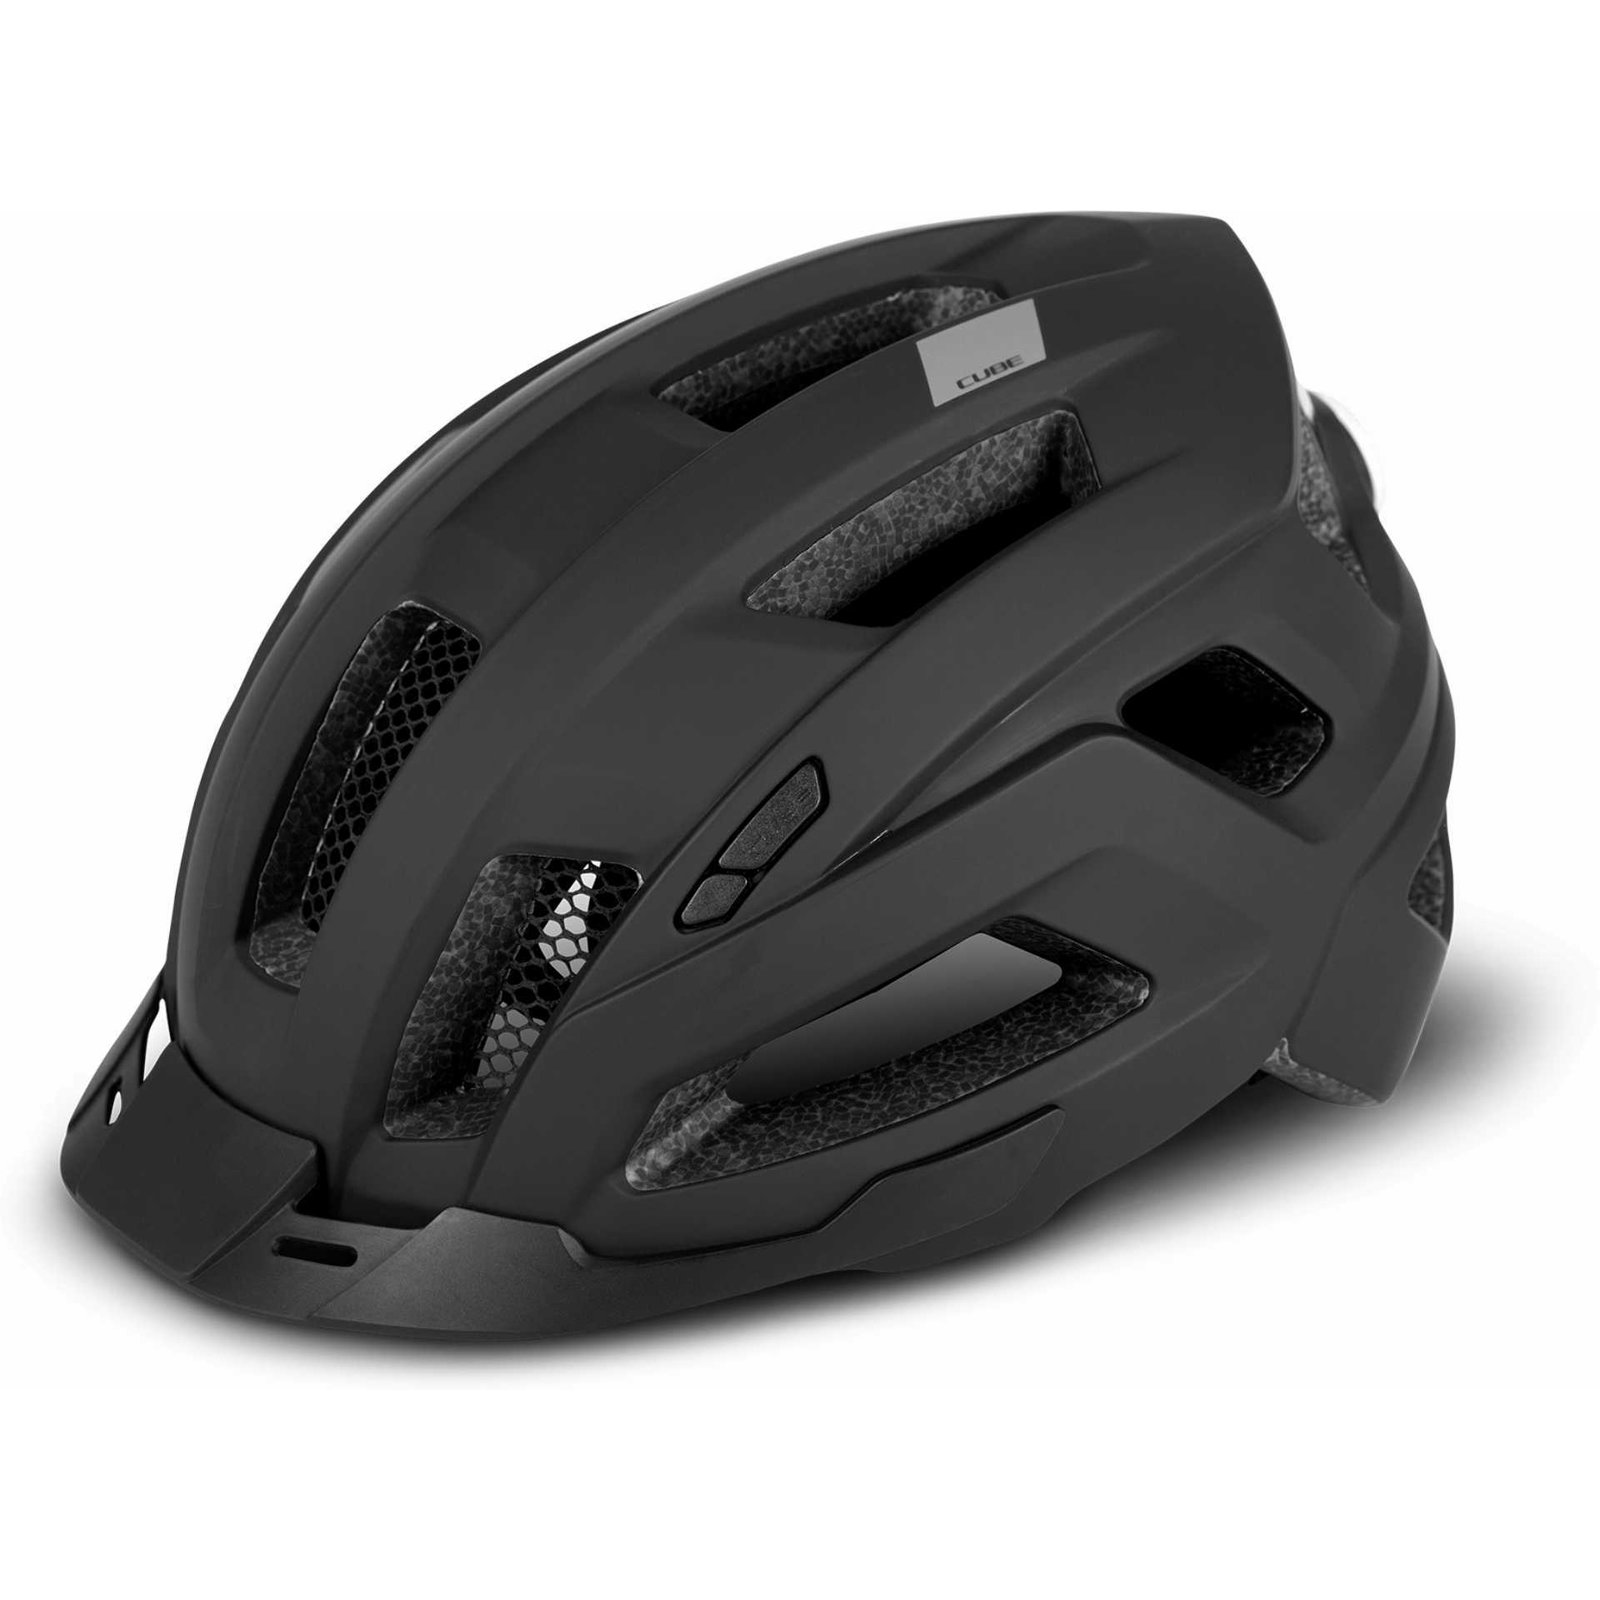 Cube Helm CINITY black